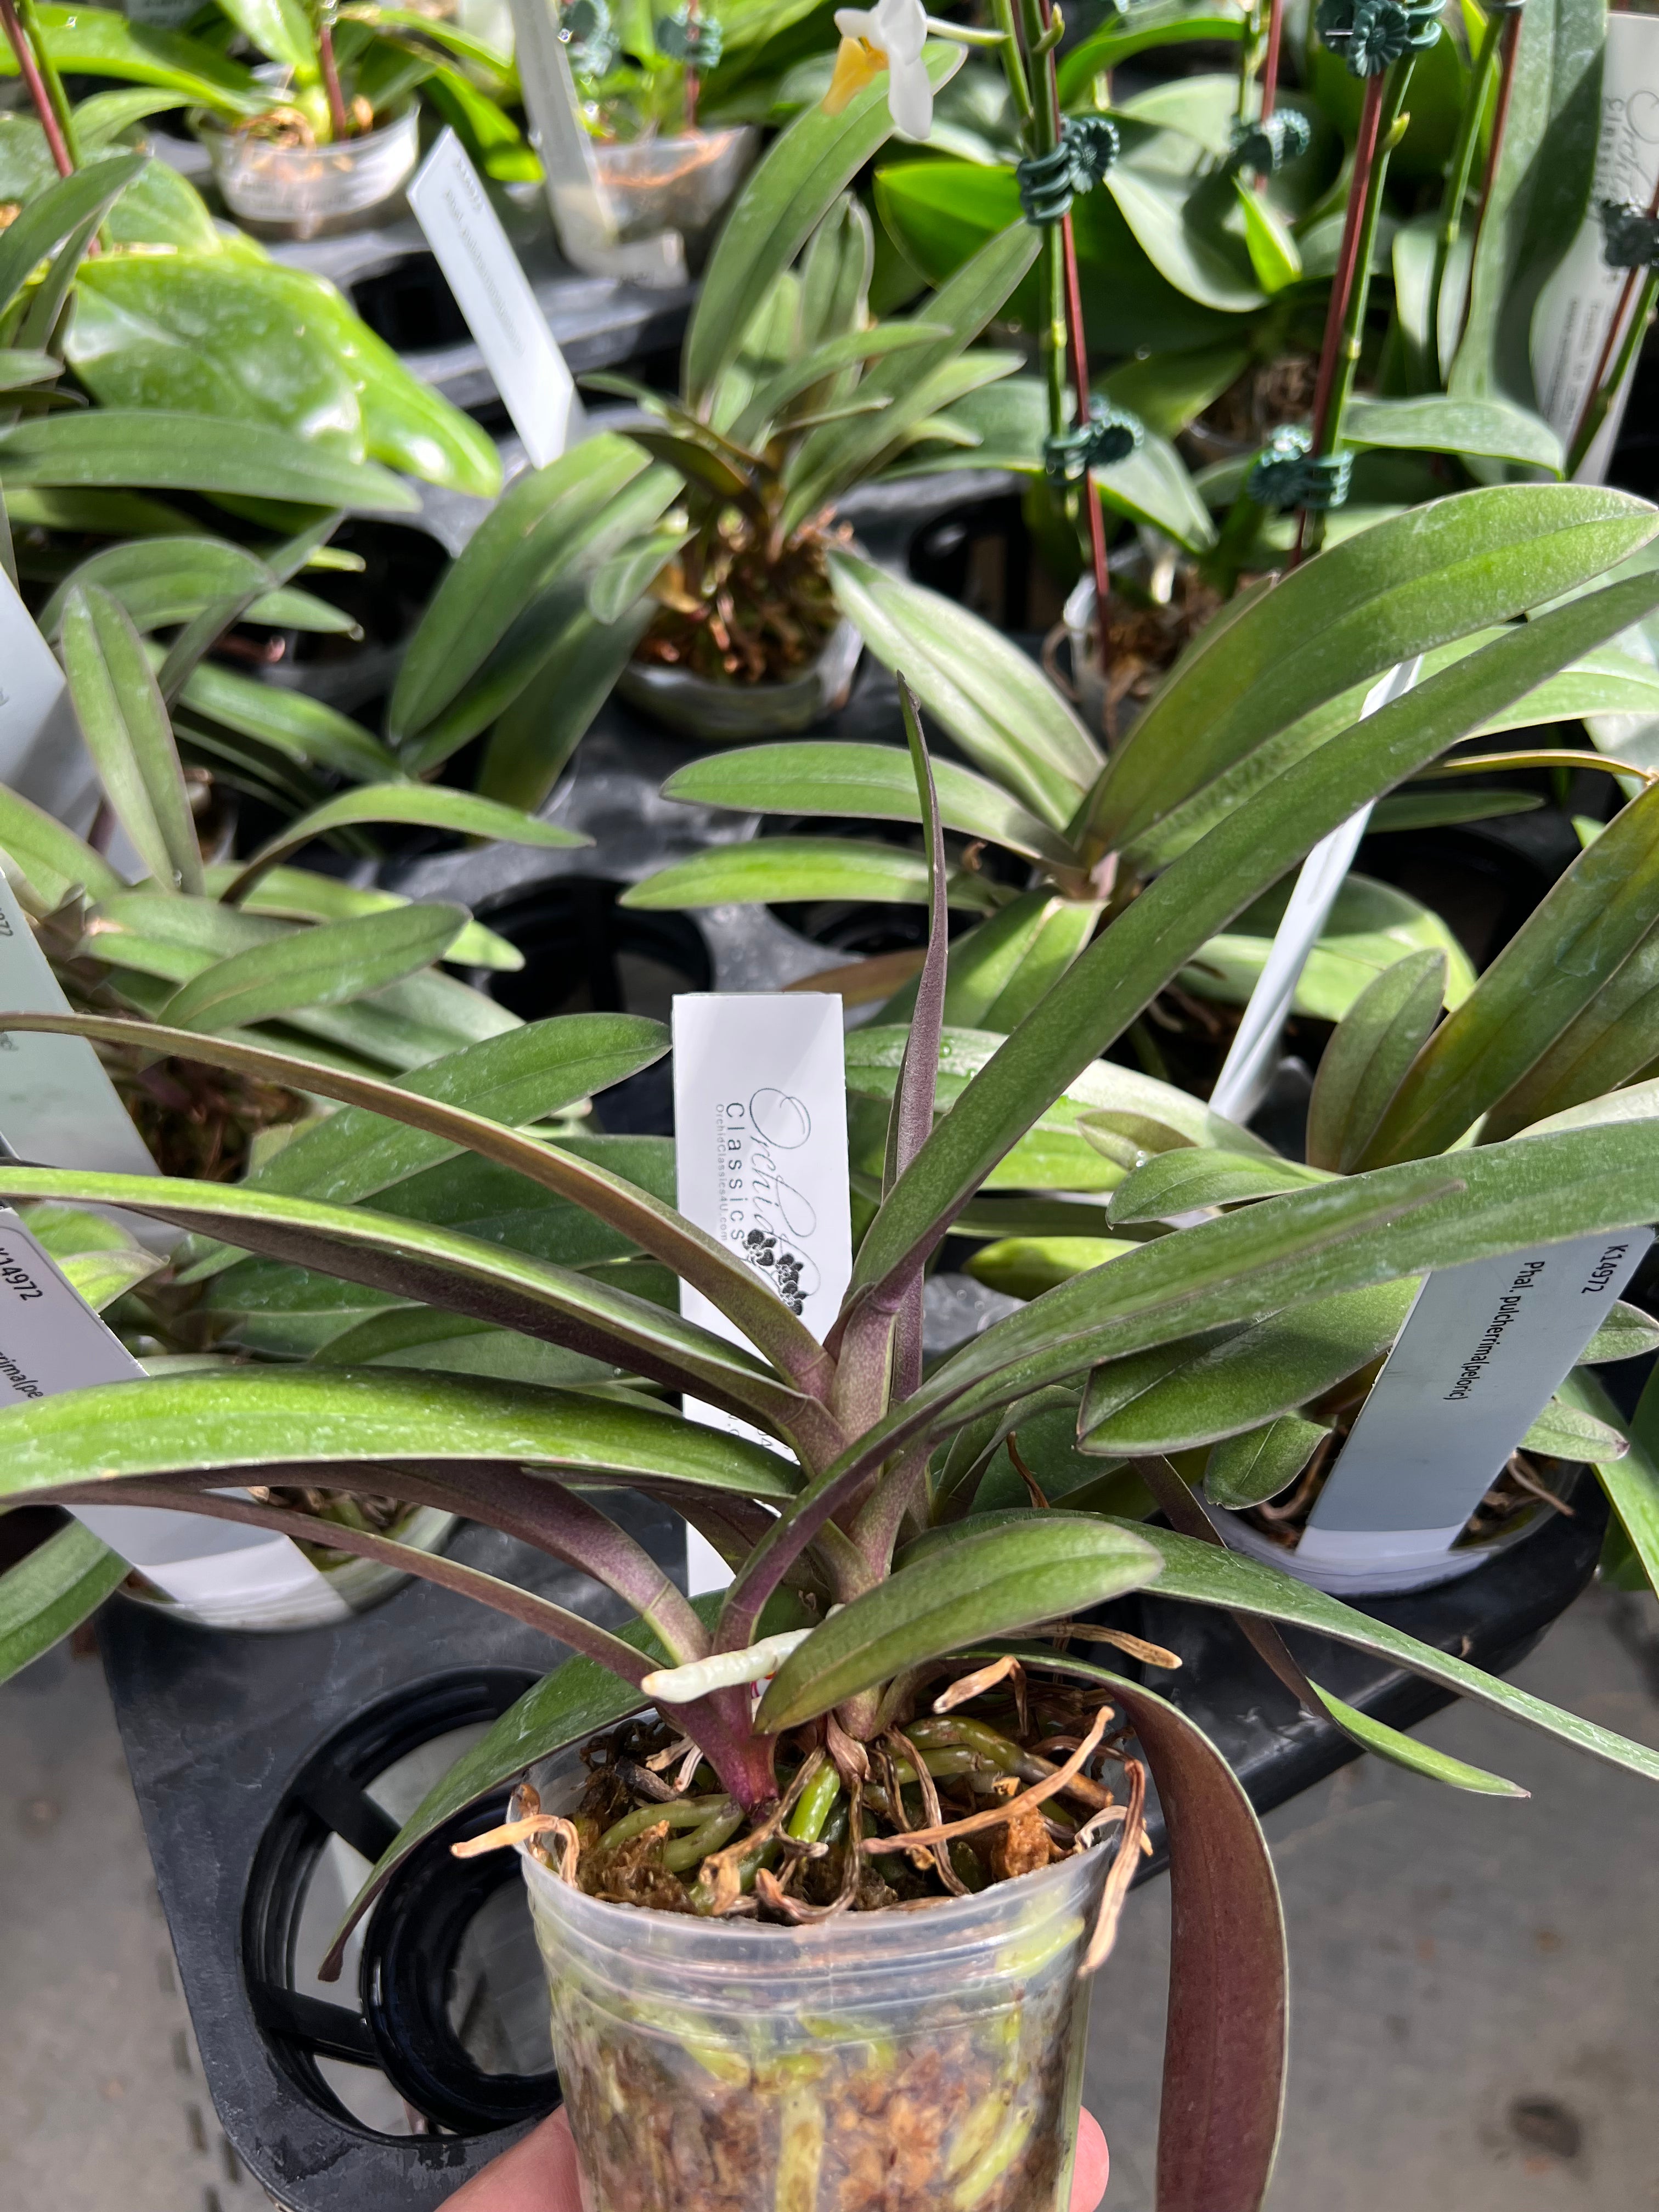 Doritis (Phalaenopsis) pulcherrima peloric